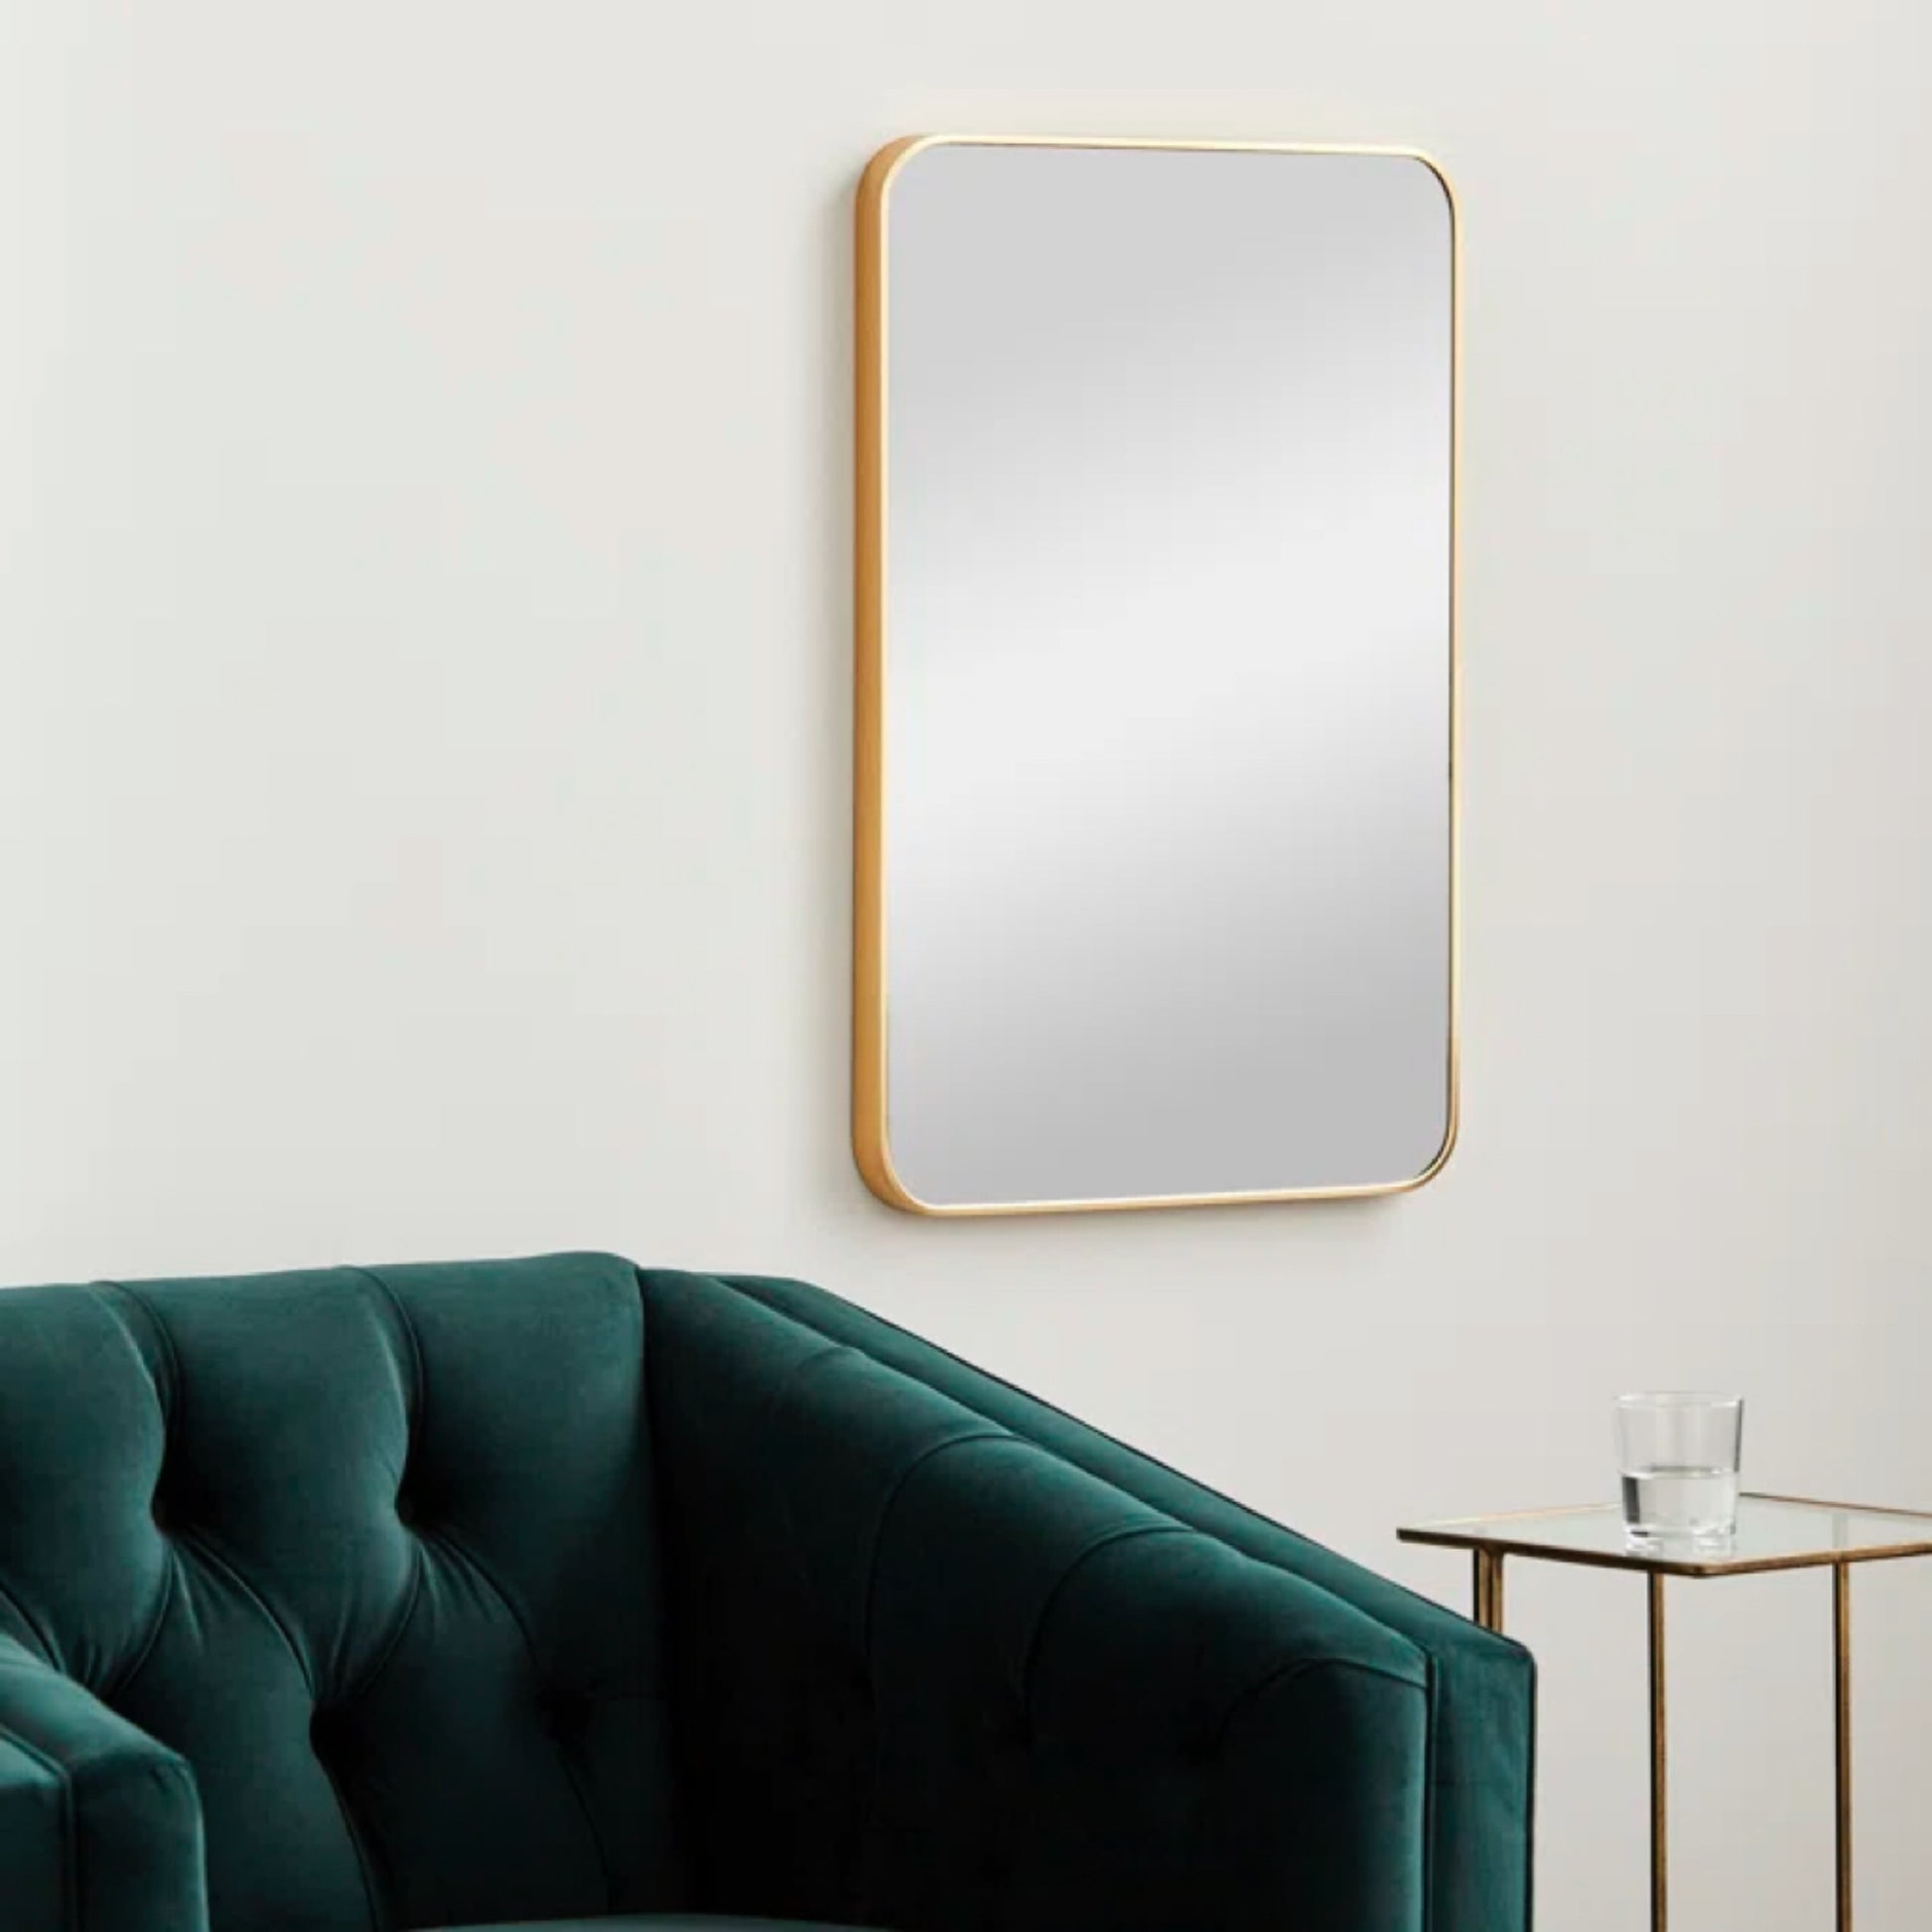 Gold 24 "x32" Rectangular Bathroom Wall Mirror gold-classic-mdf+glass-aluminium alloy